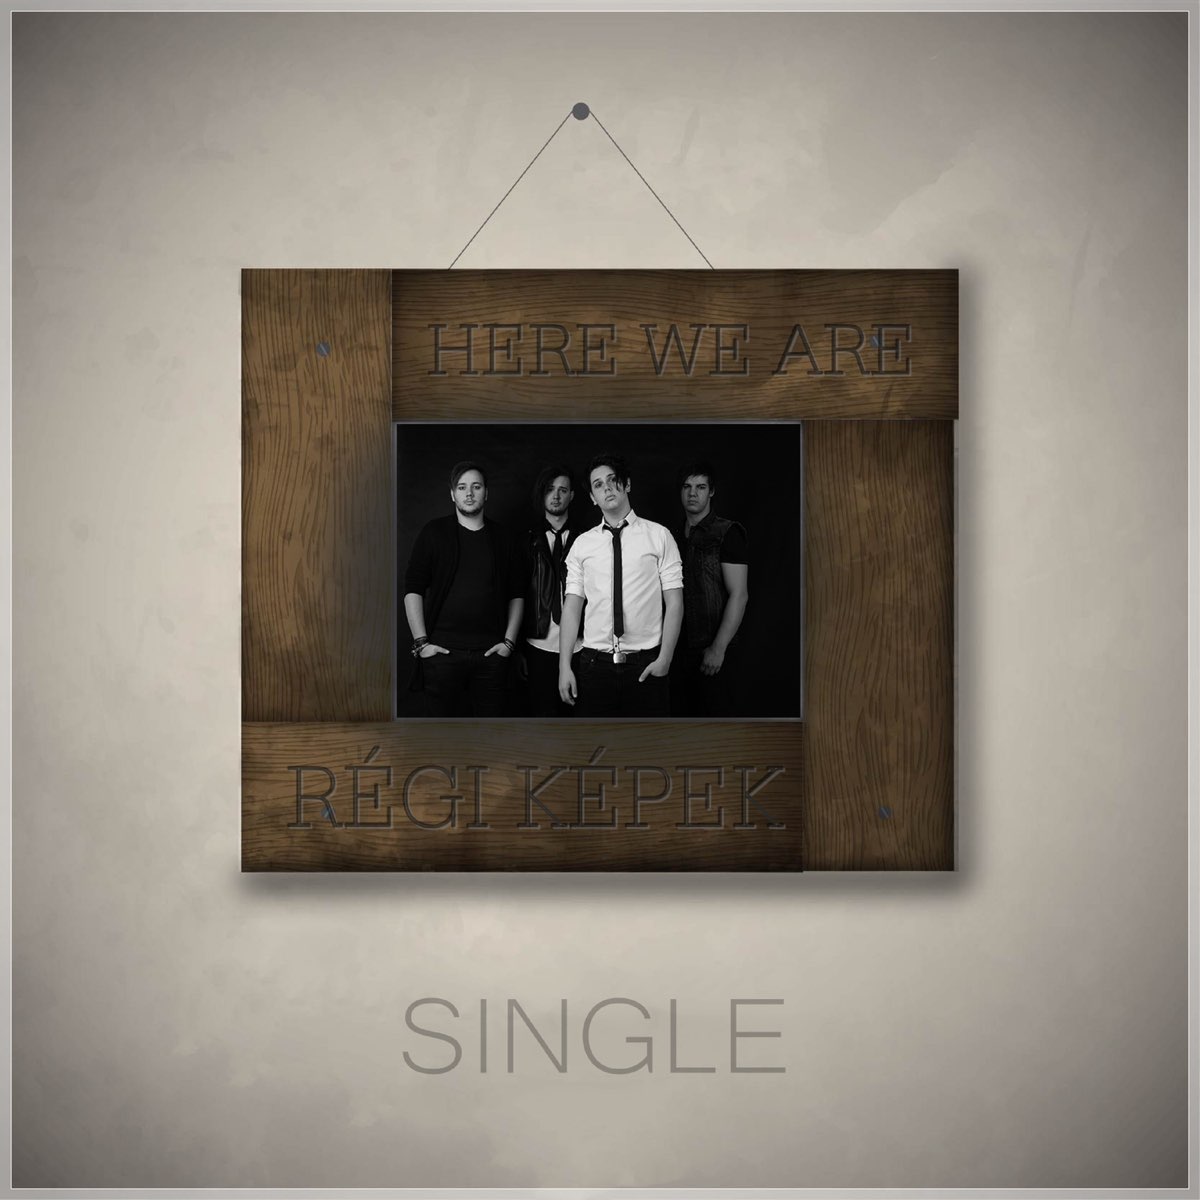 Régi képek - Single - Album by Here We Are - Apple Music